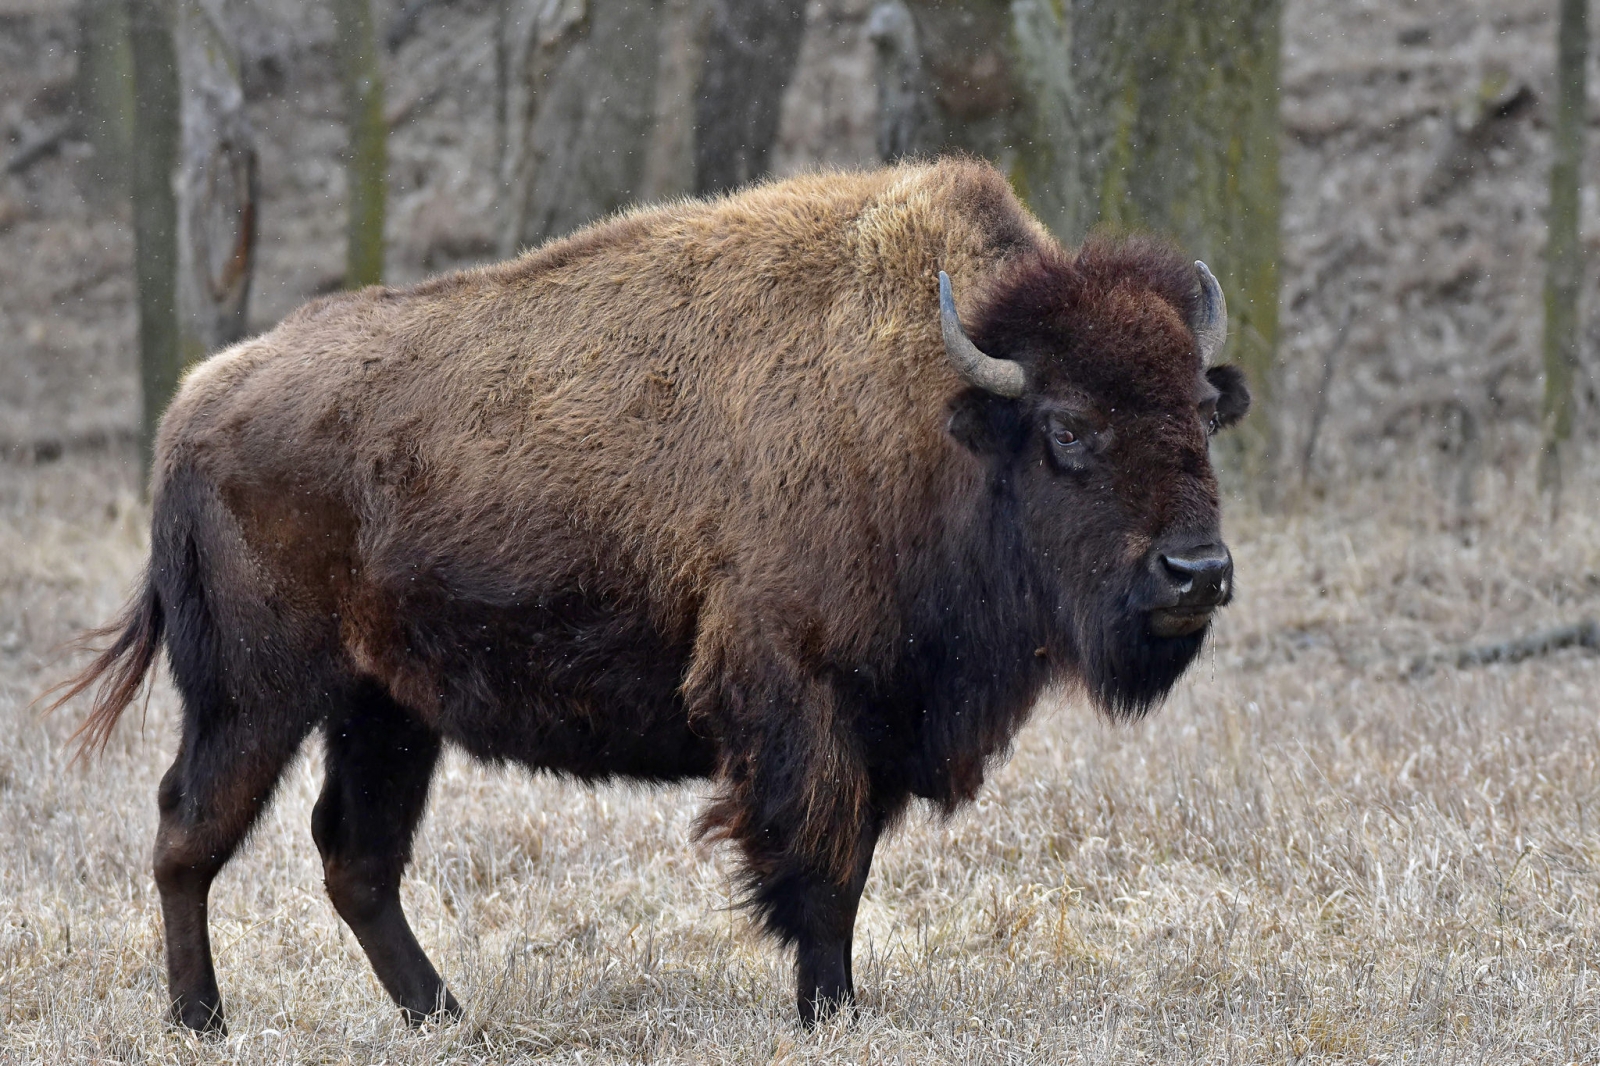 Ancient bison